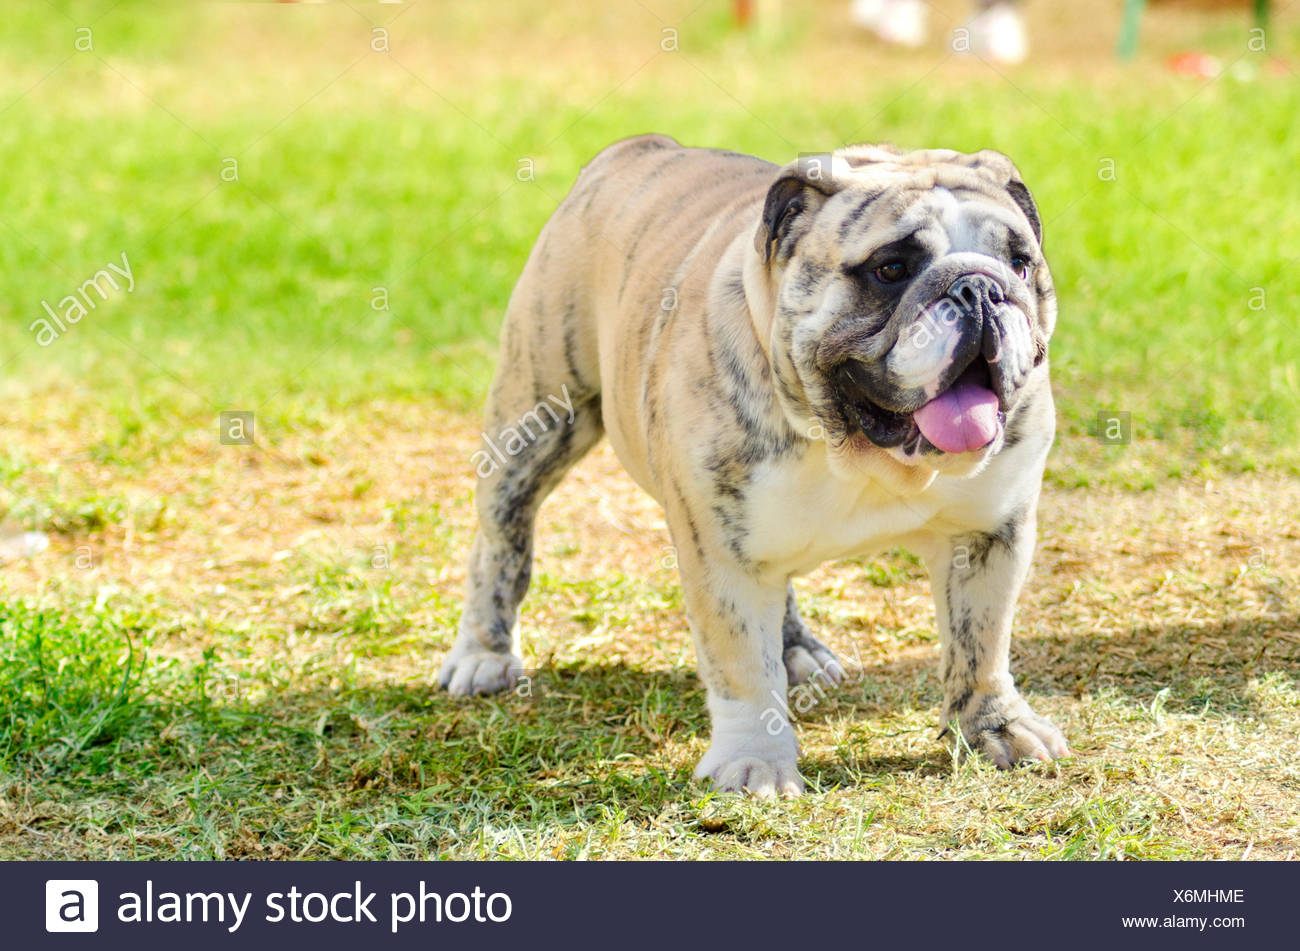 fawn brindle and white english bulldog